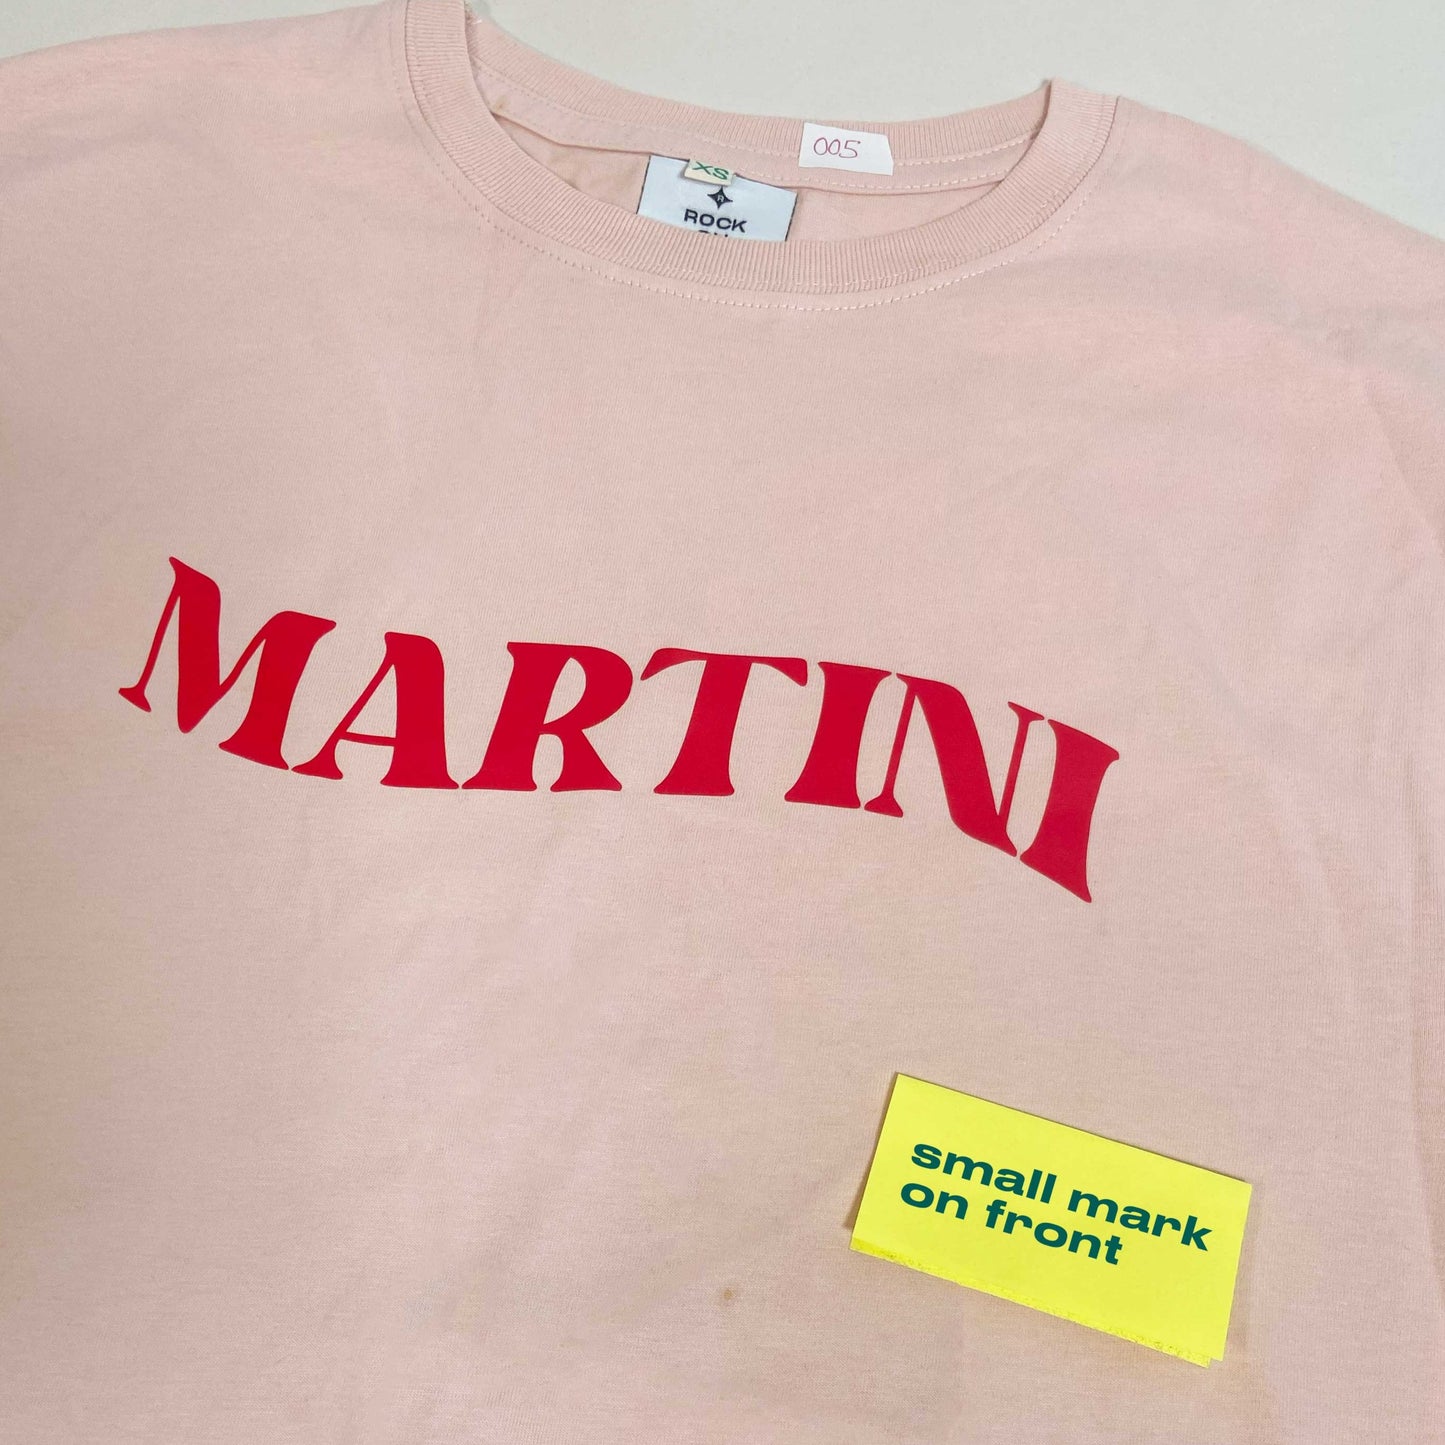 XS Peach Martini T-Shirt SALE